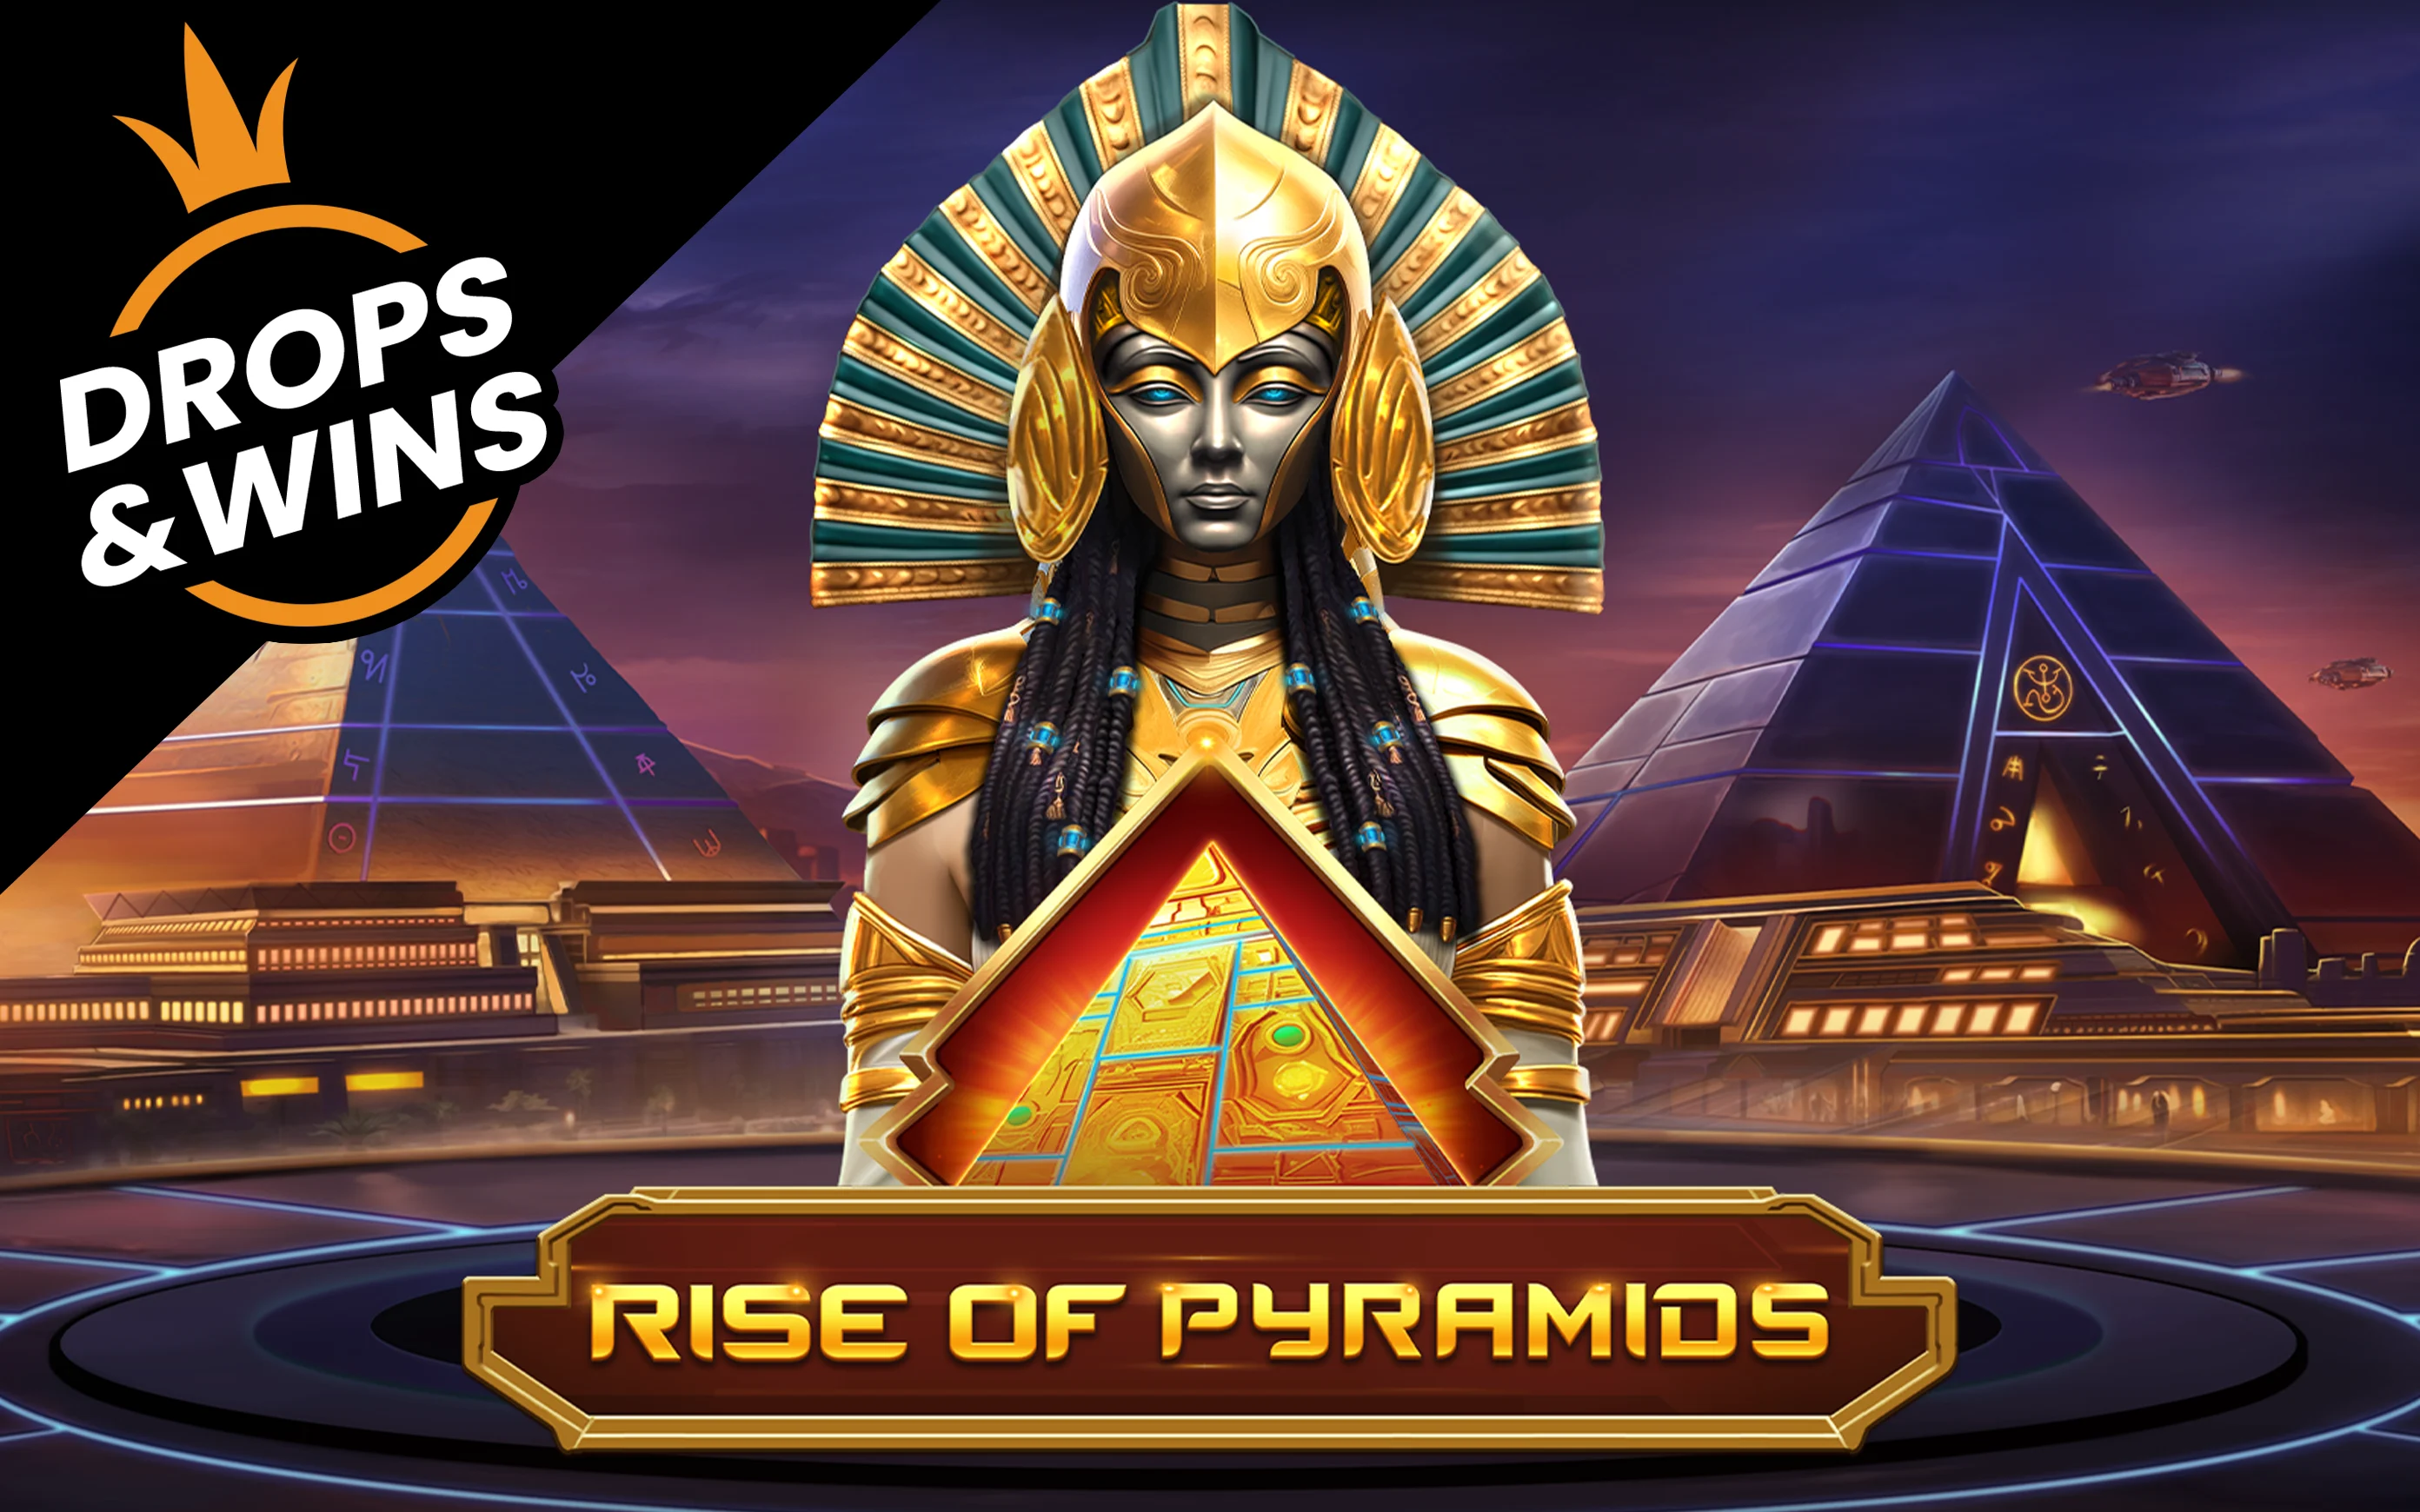 Spil Rise of Pyramids på Starcasino.be online kasino
